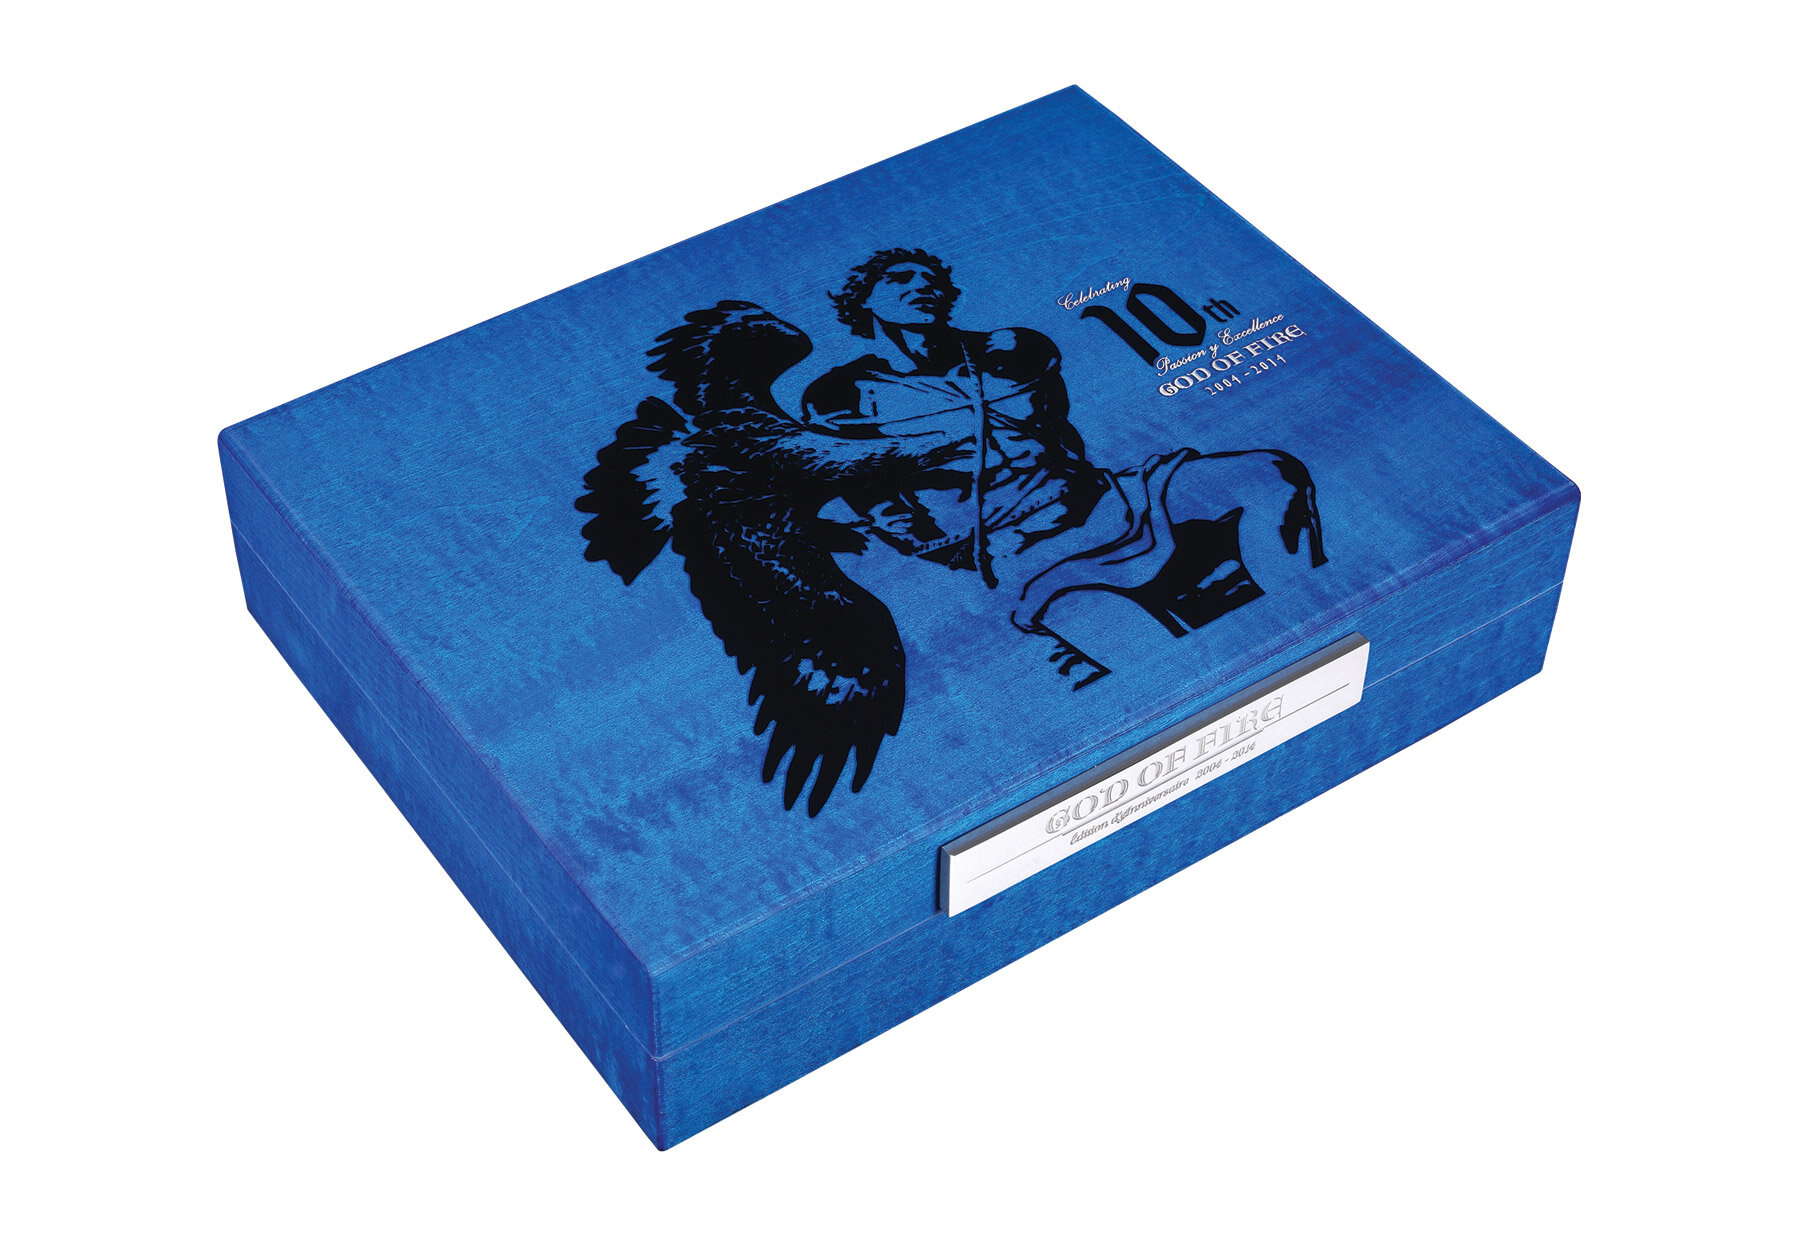 Prometheus Limited Edition Humidors | Prometheus International, Inc.